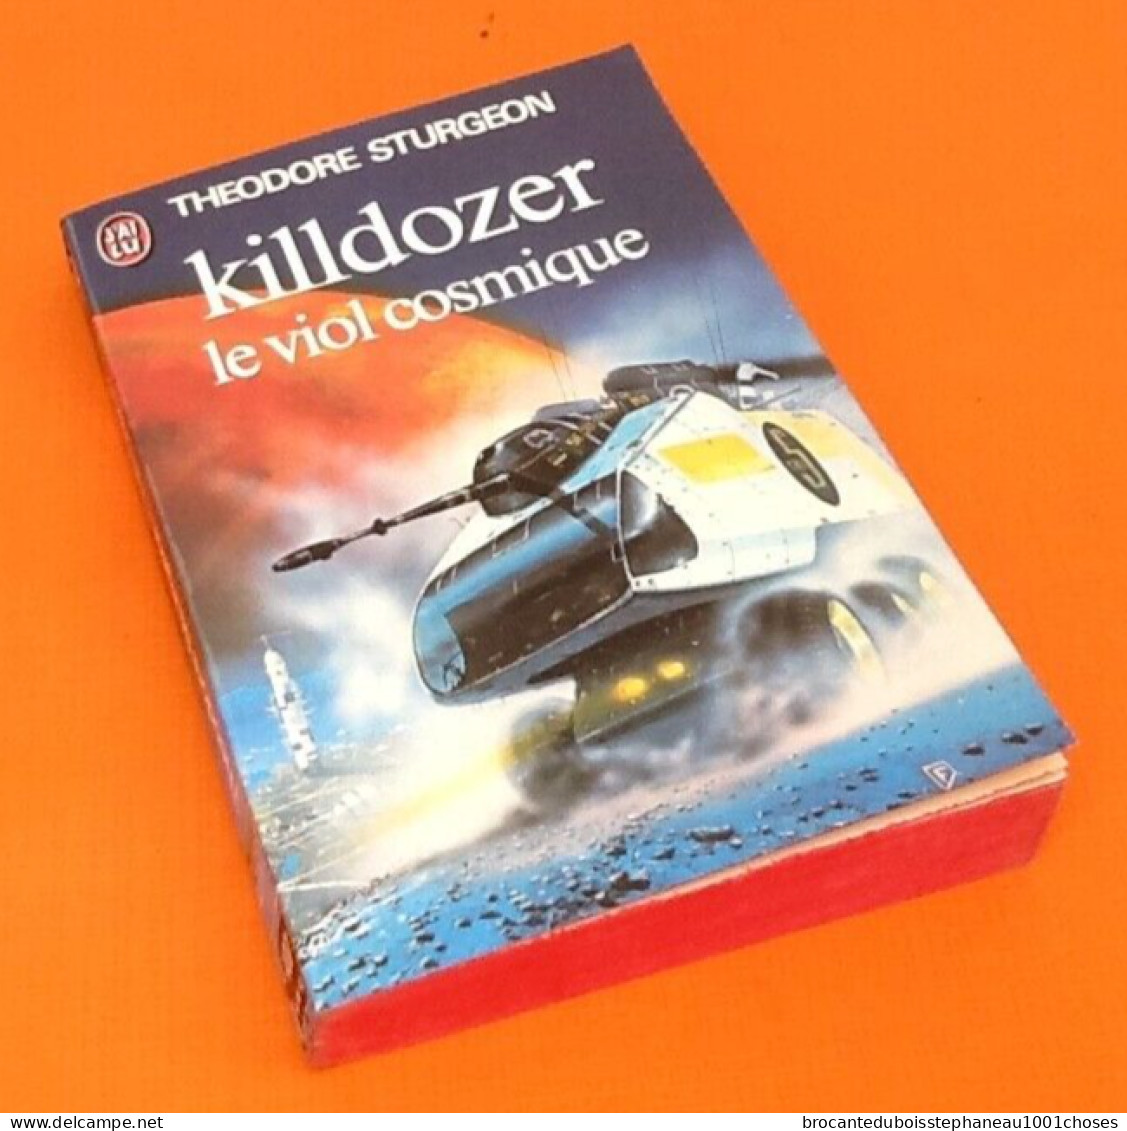 Théodore Sturgeon  Killdozer    Le Viol  Cosmique (1982) Editions J' Ai Lu - J'ai Lu